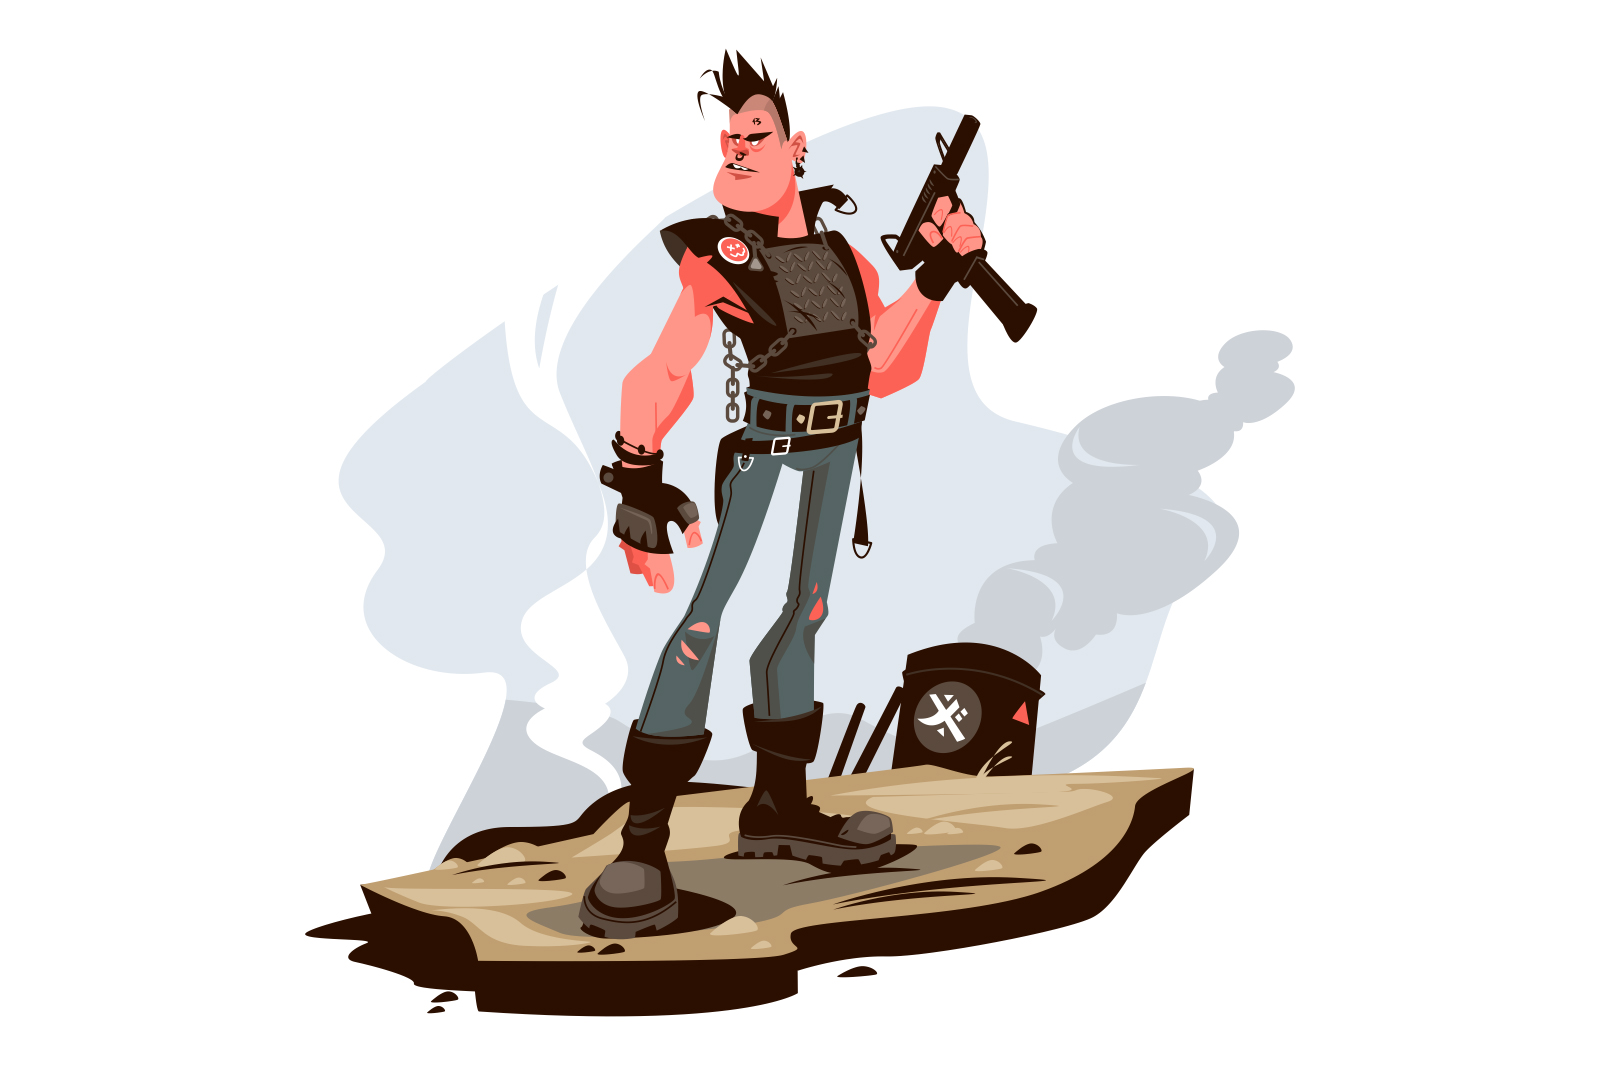 Punk rock brutal man with gun on battlefield vector illustration. Man with handgun. Popular punk subculture flat style concept